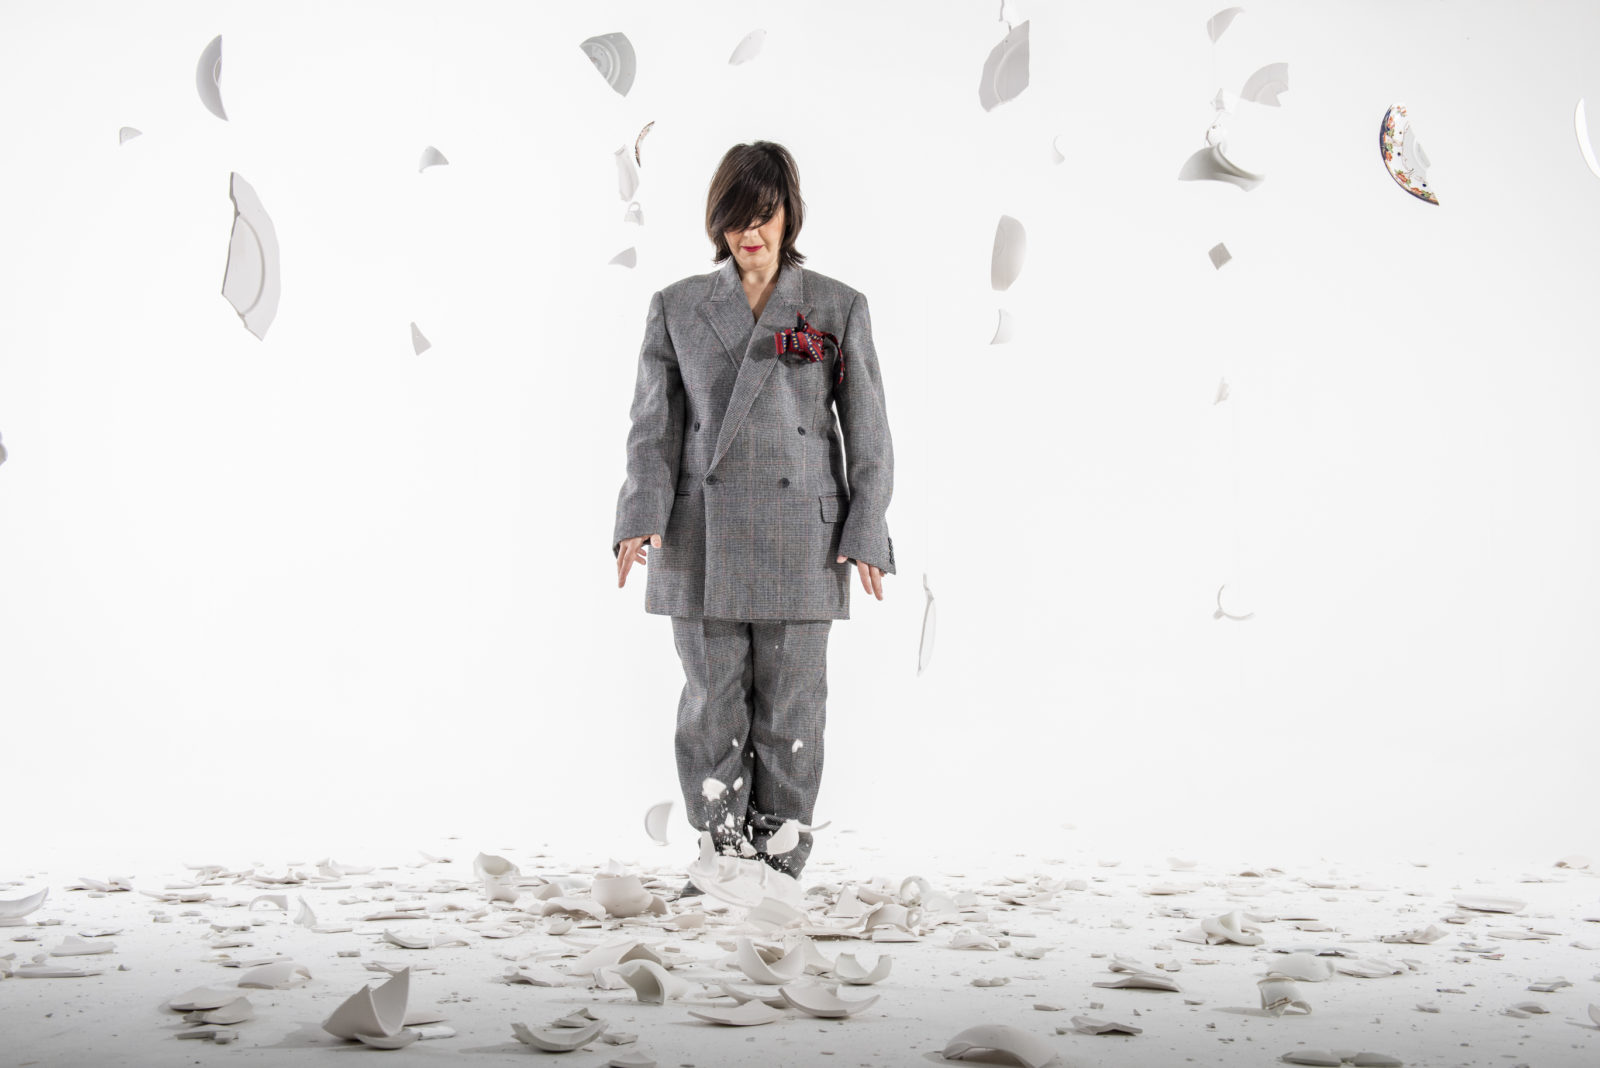 A woman dressed in a man's suit stands amongst broken crockery